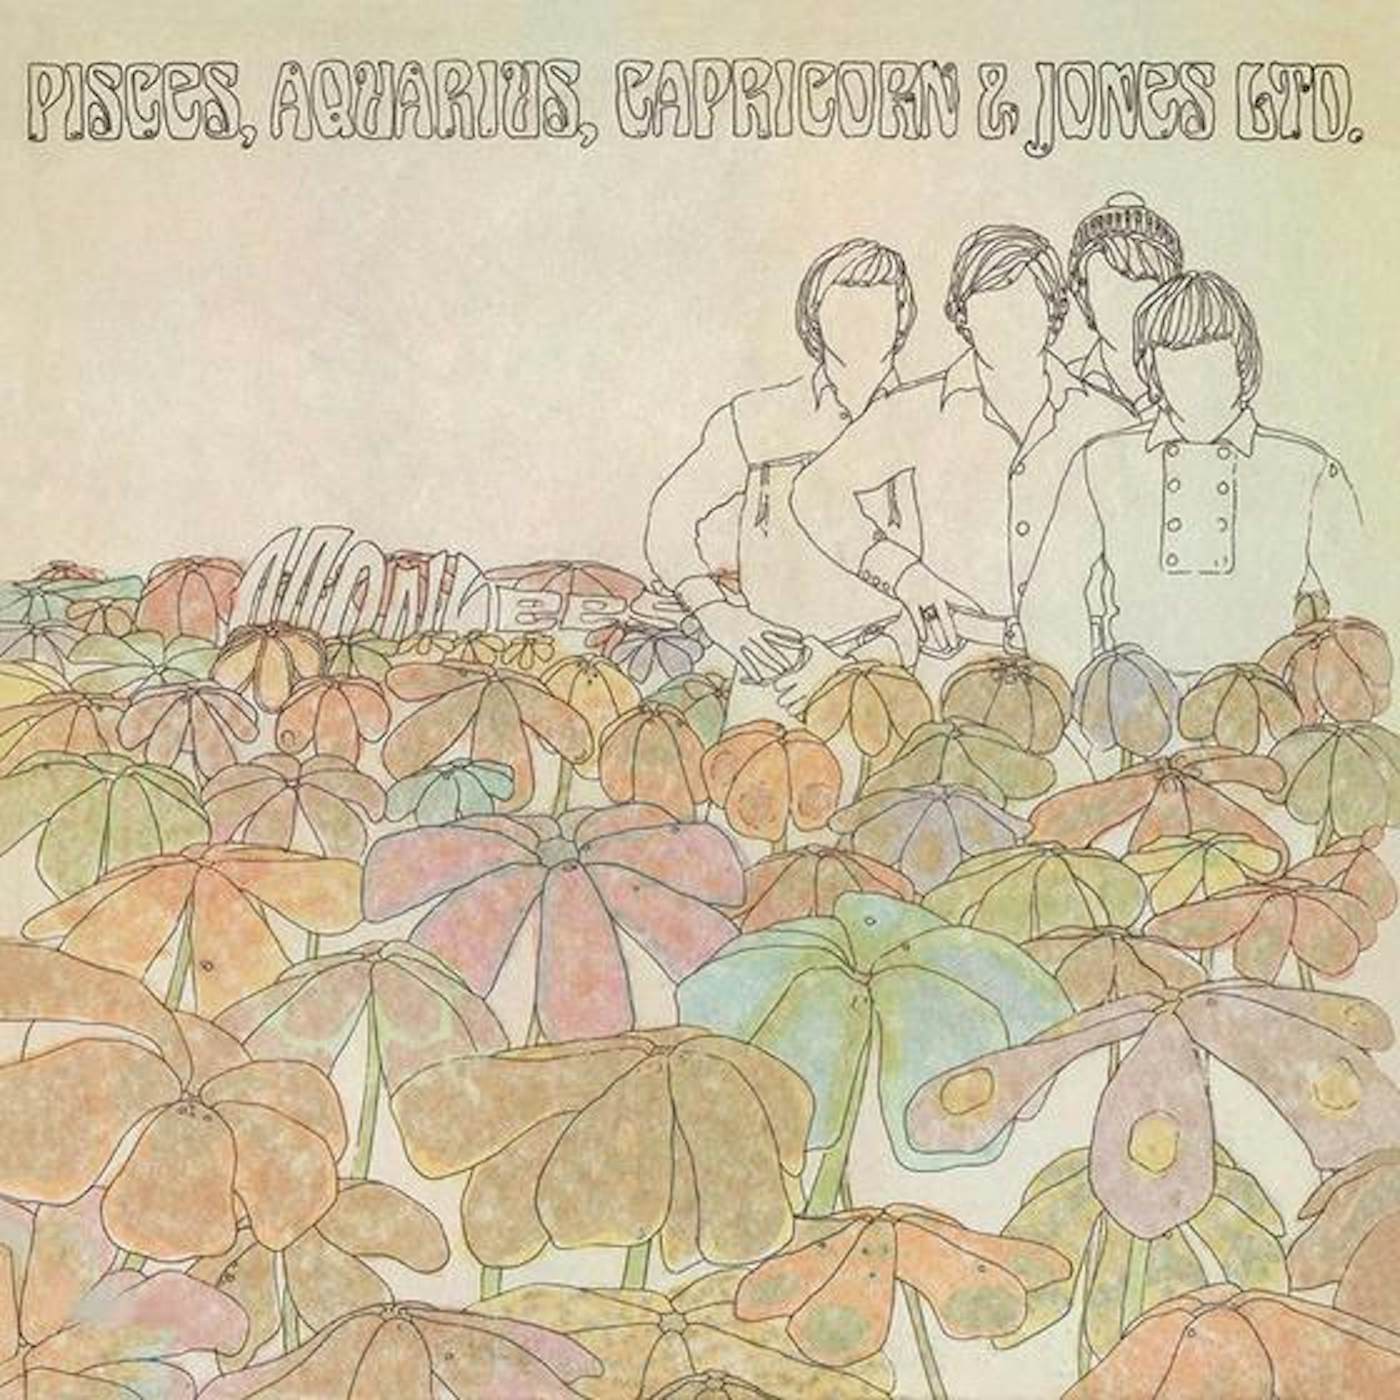 The Monkees PISCES, AQUARIUS, CAPRICORN & JONES LTD. (VIOLET VINYL/LIMITED ANNIVERSARY EDITION) Vinyl Record